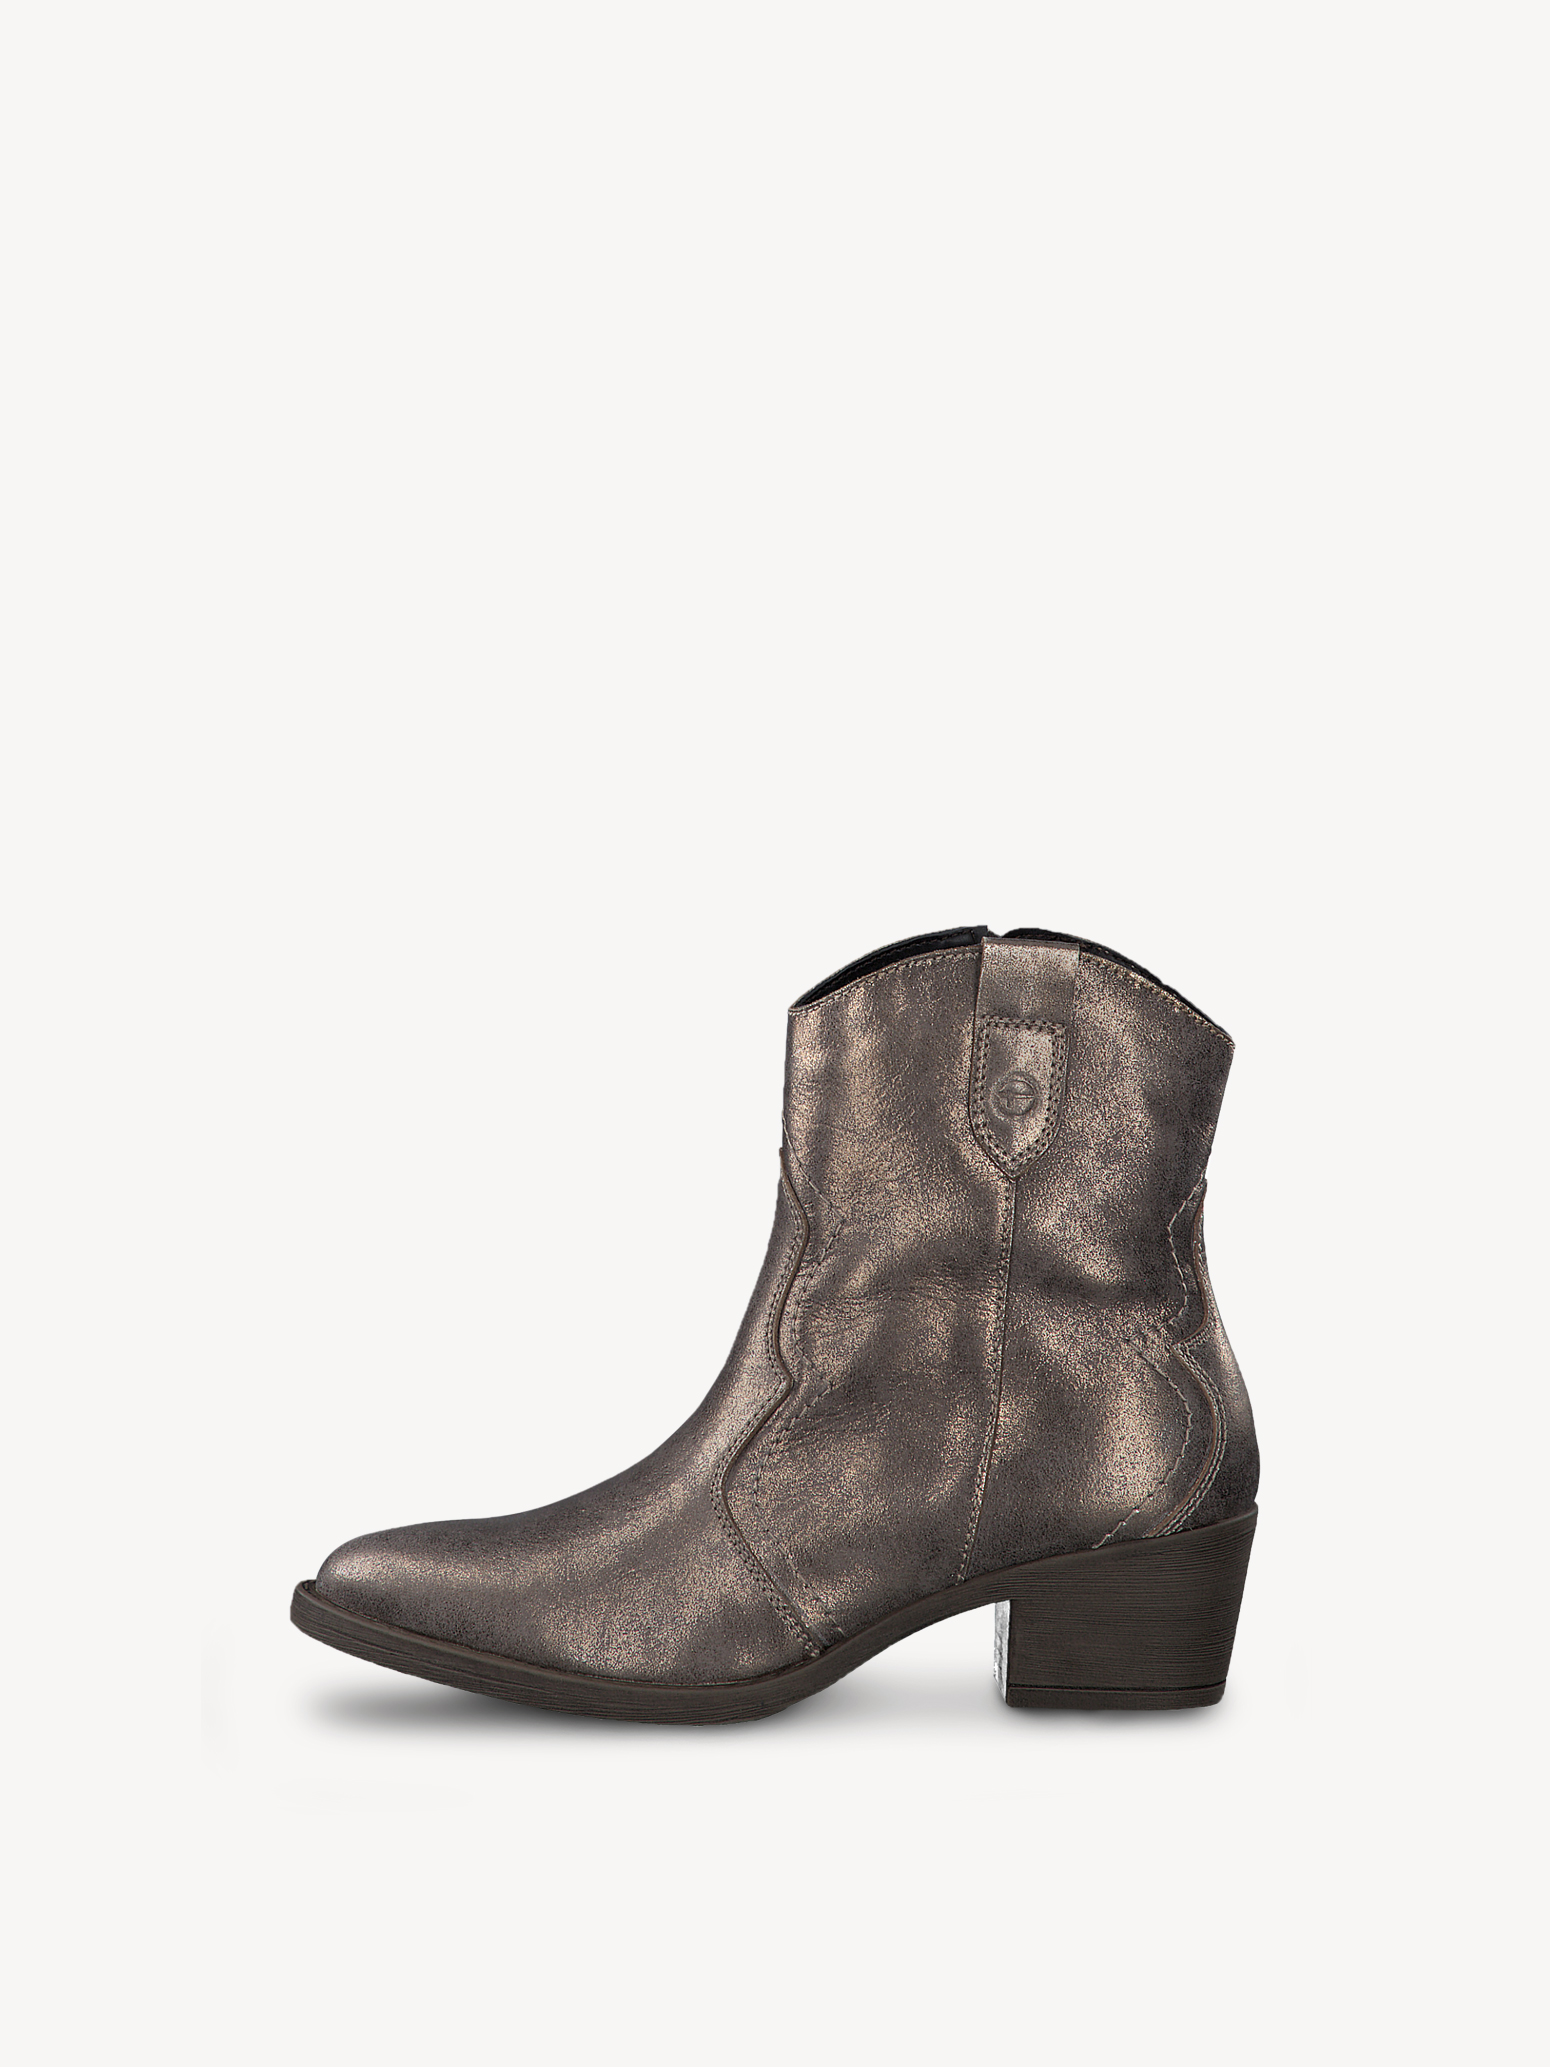 Leather Cowboy boots - metallic